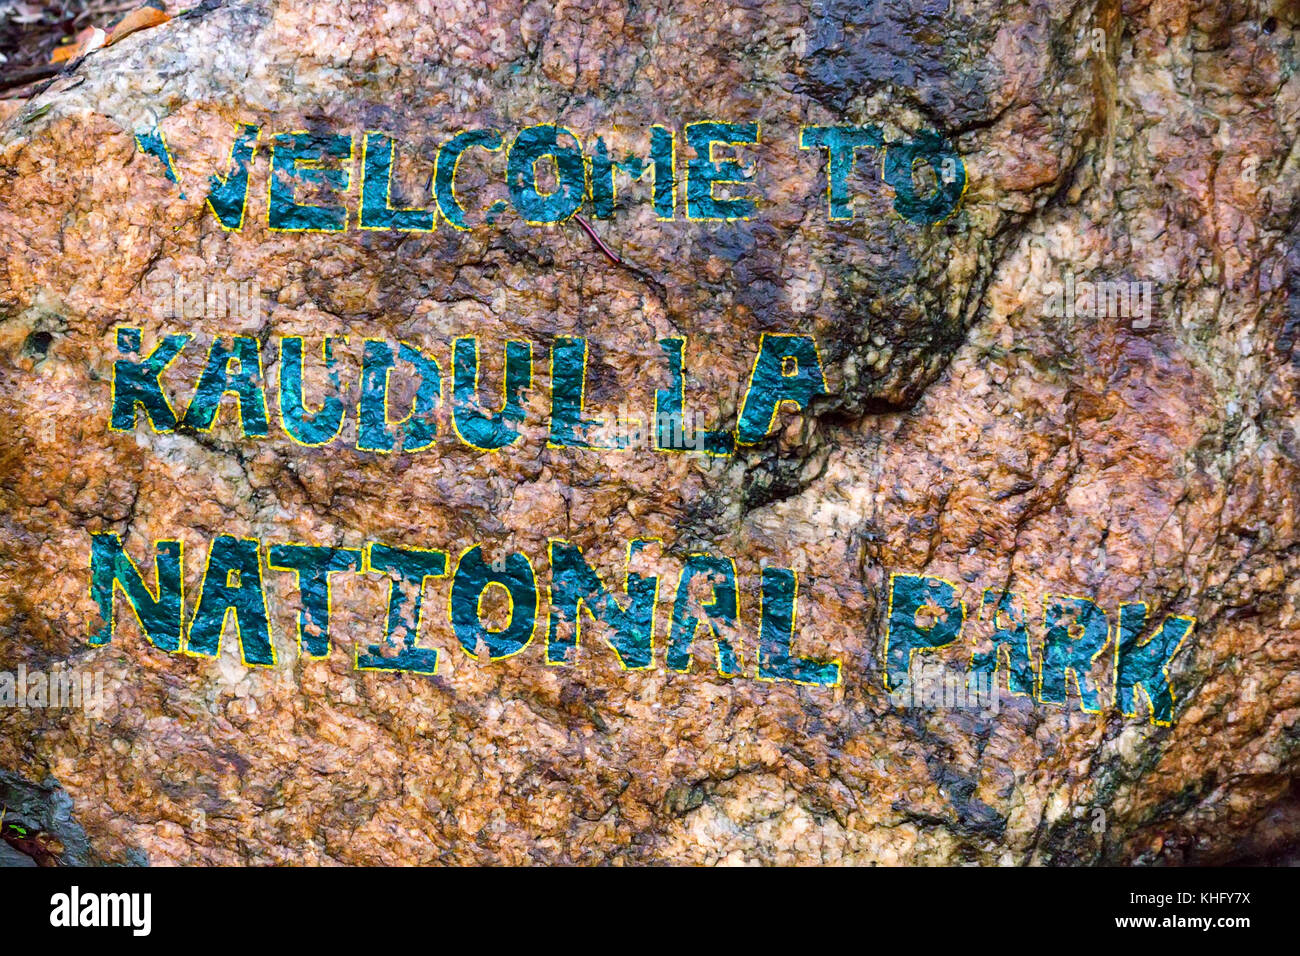 Nota de entrada en el parque nacional de kaudulla, Sri Lanka Foto de stock